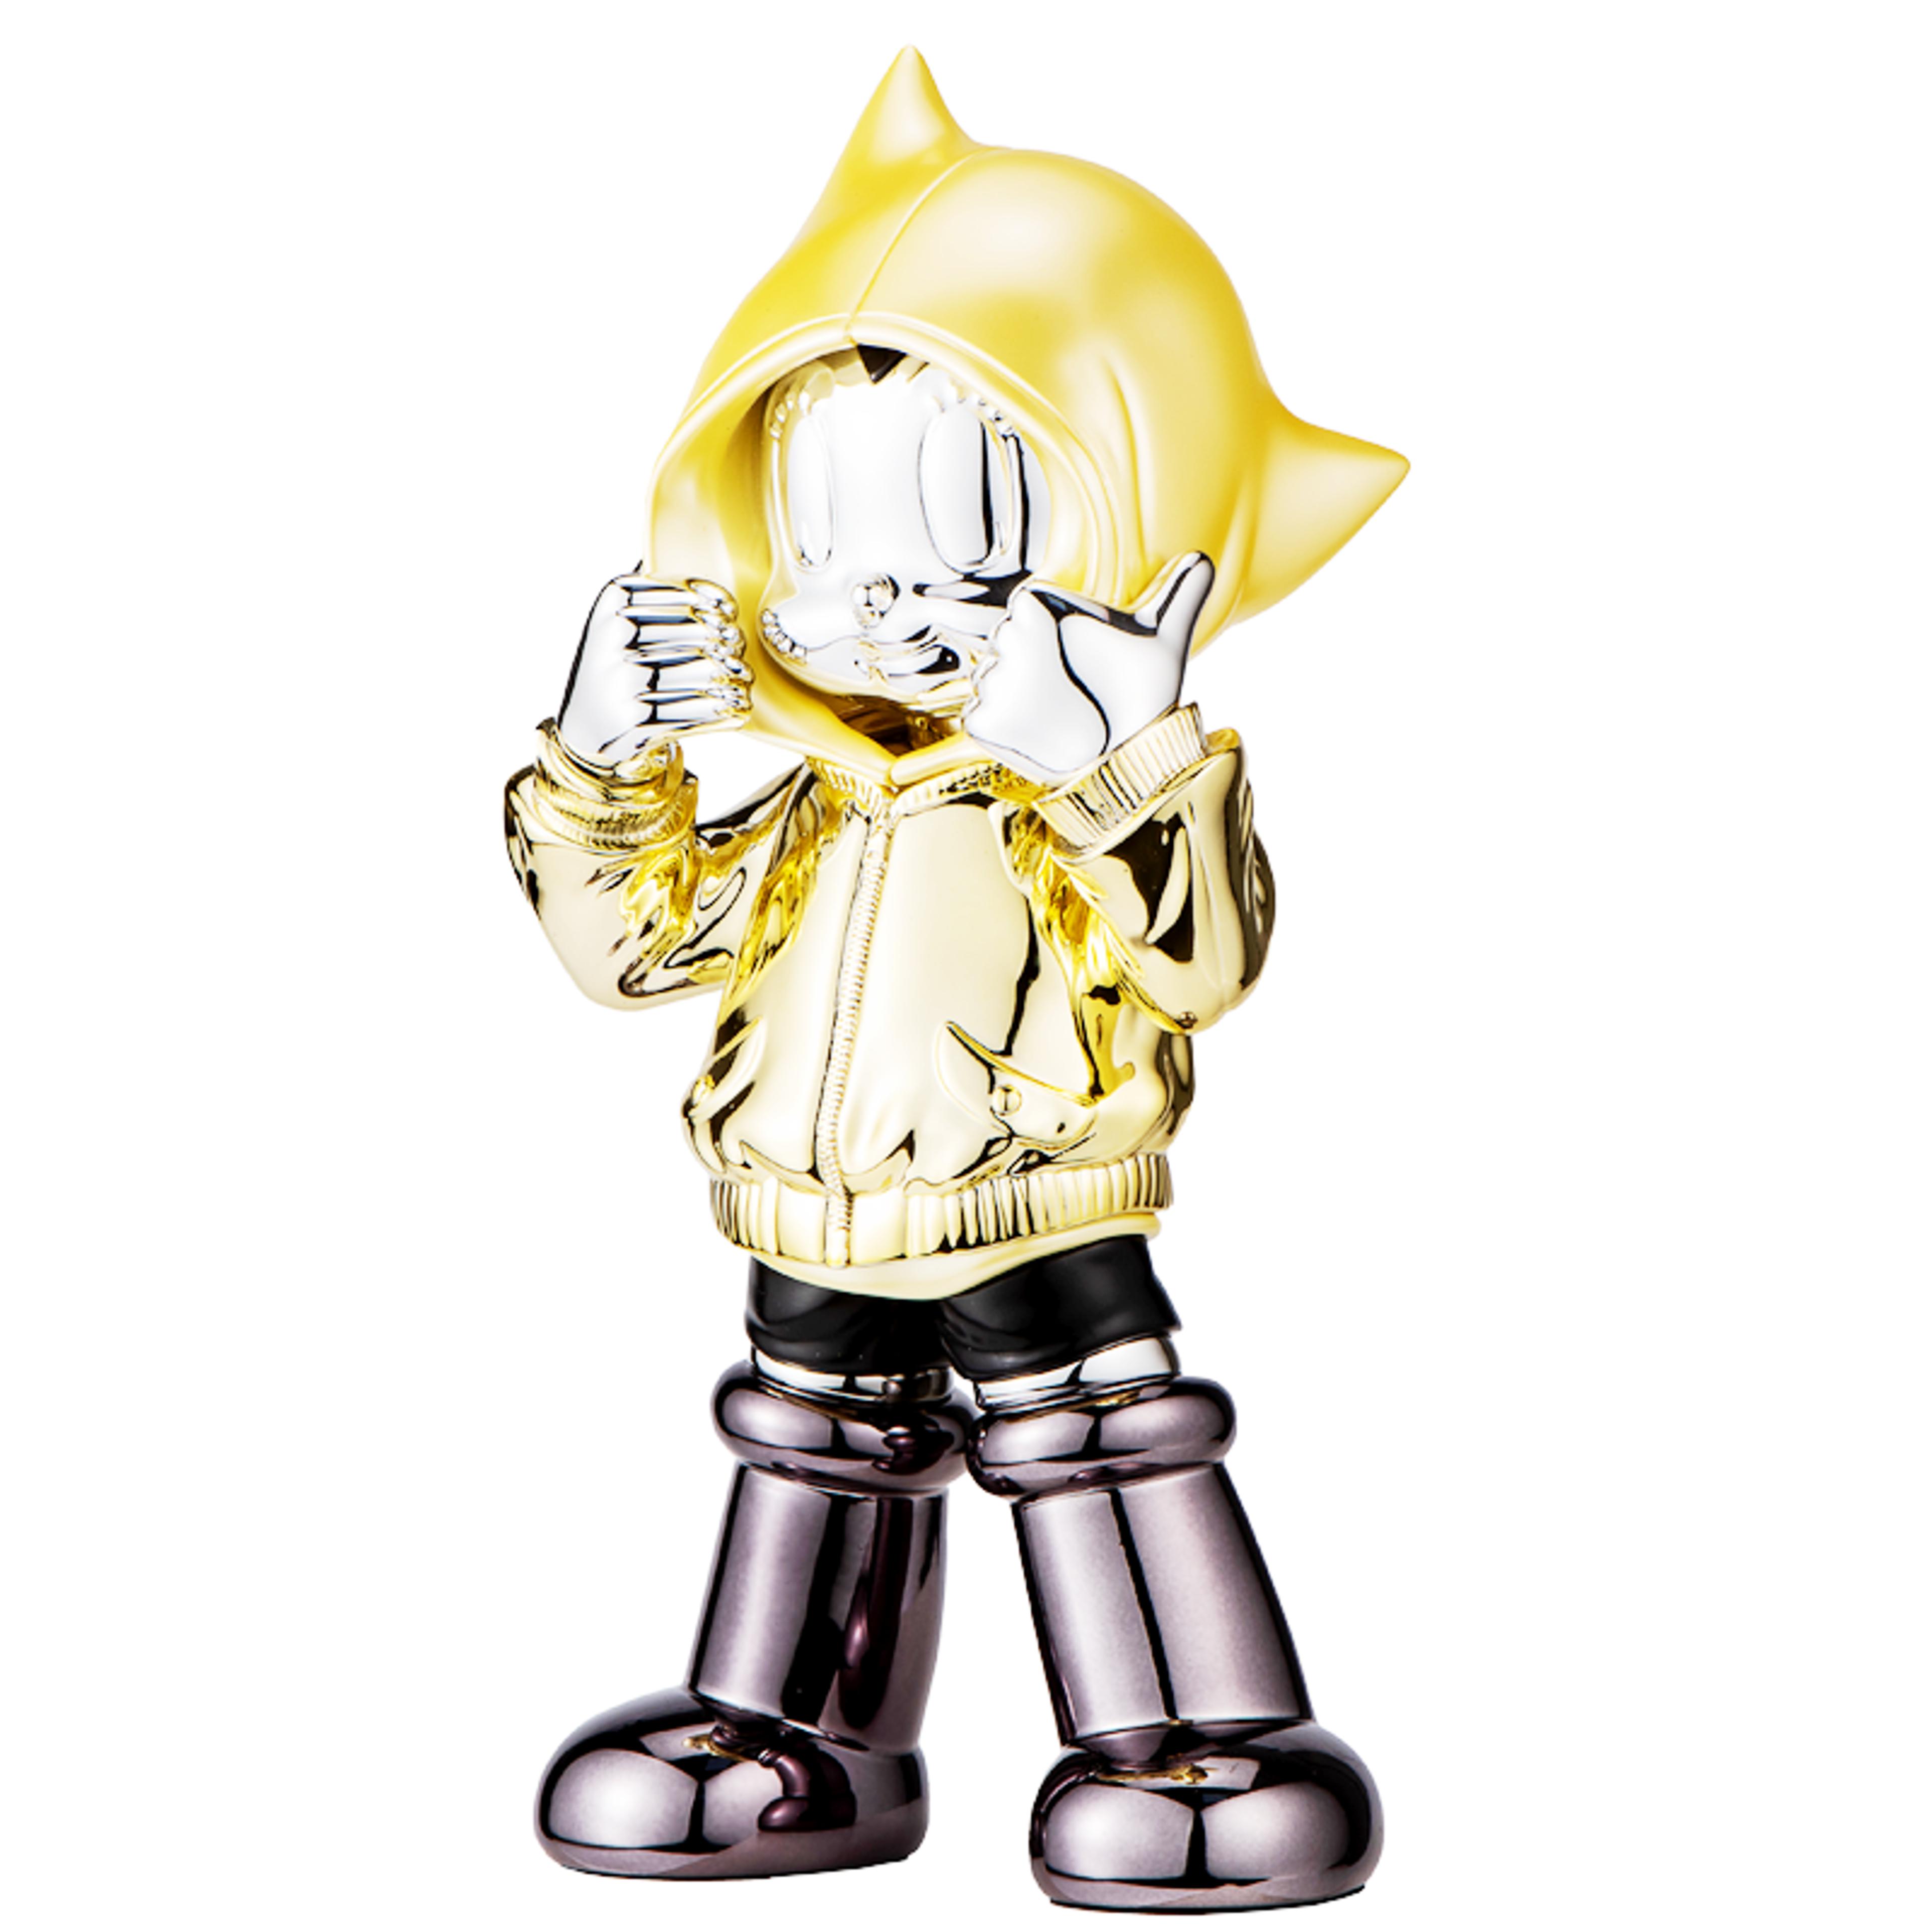 Alternate View 1 of Astro Boy Chrome Hoodie - Gold Yellow